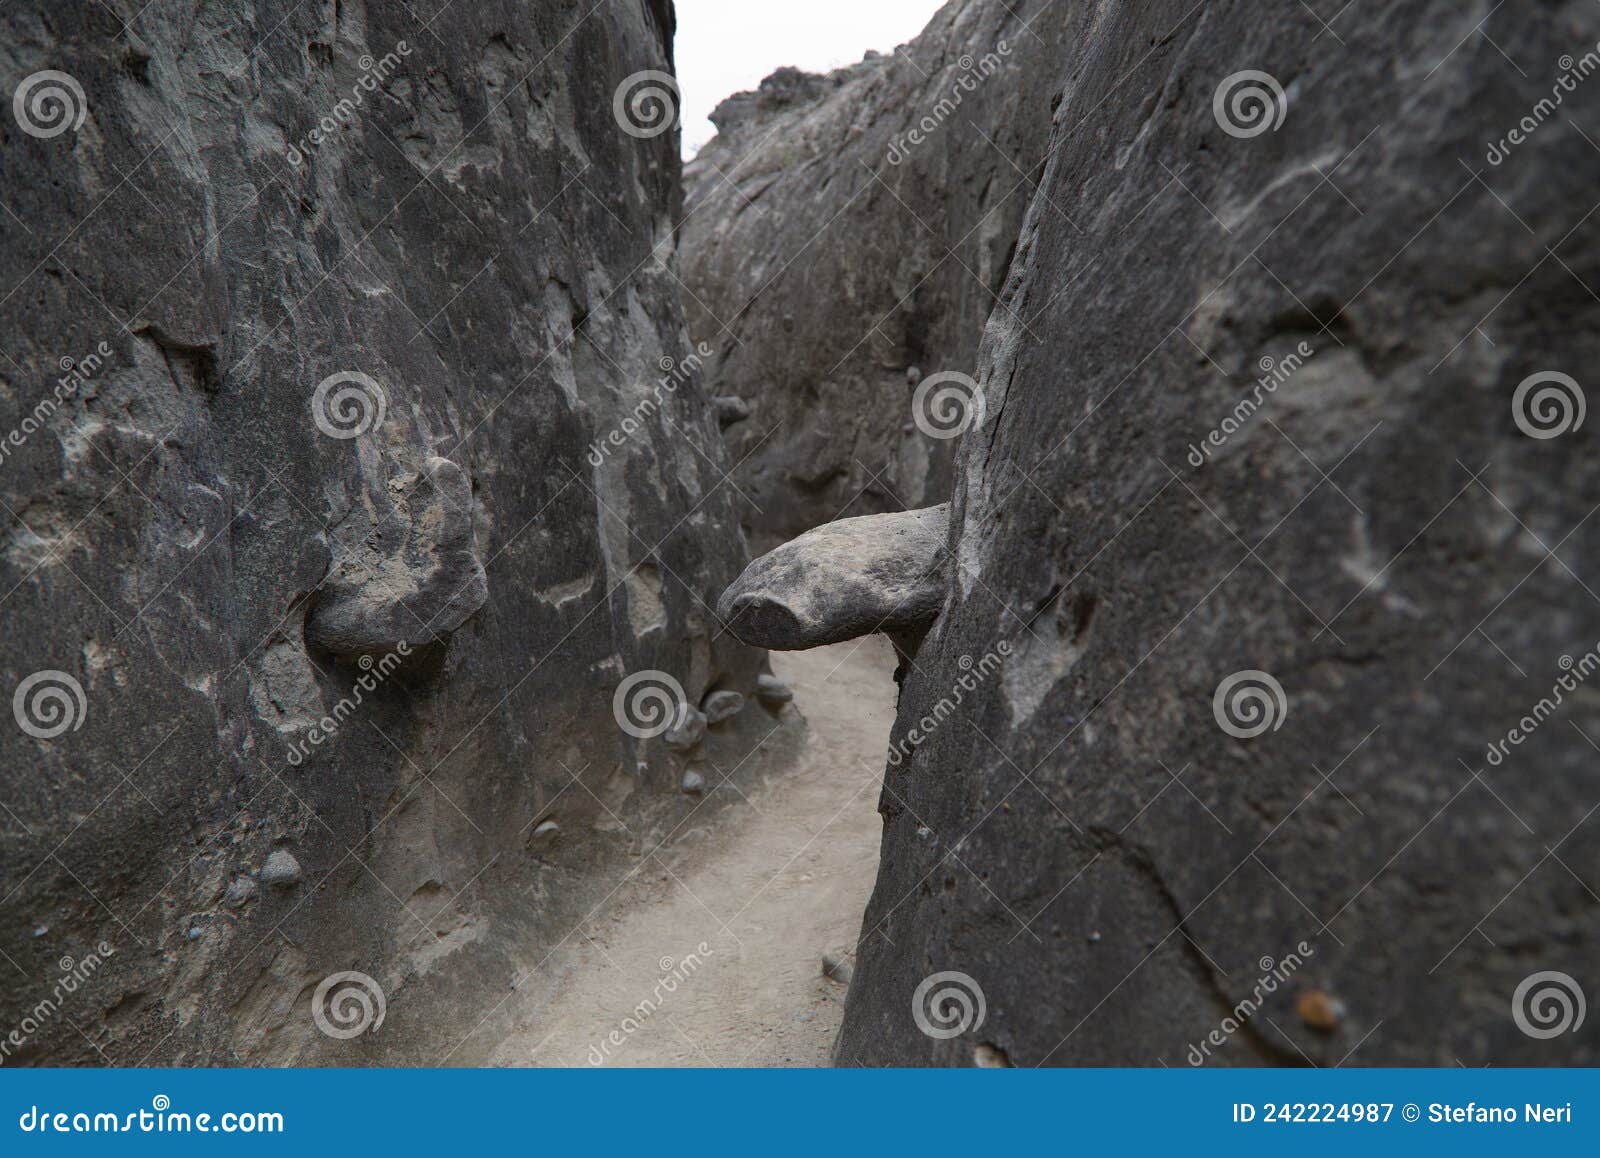 the narrow walls of the los hoyos trail in the gray desert of tatacoa, colombia